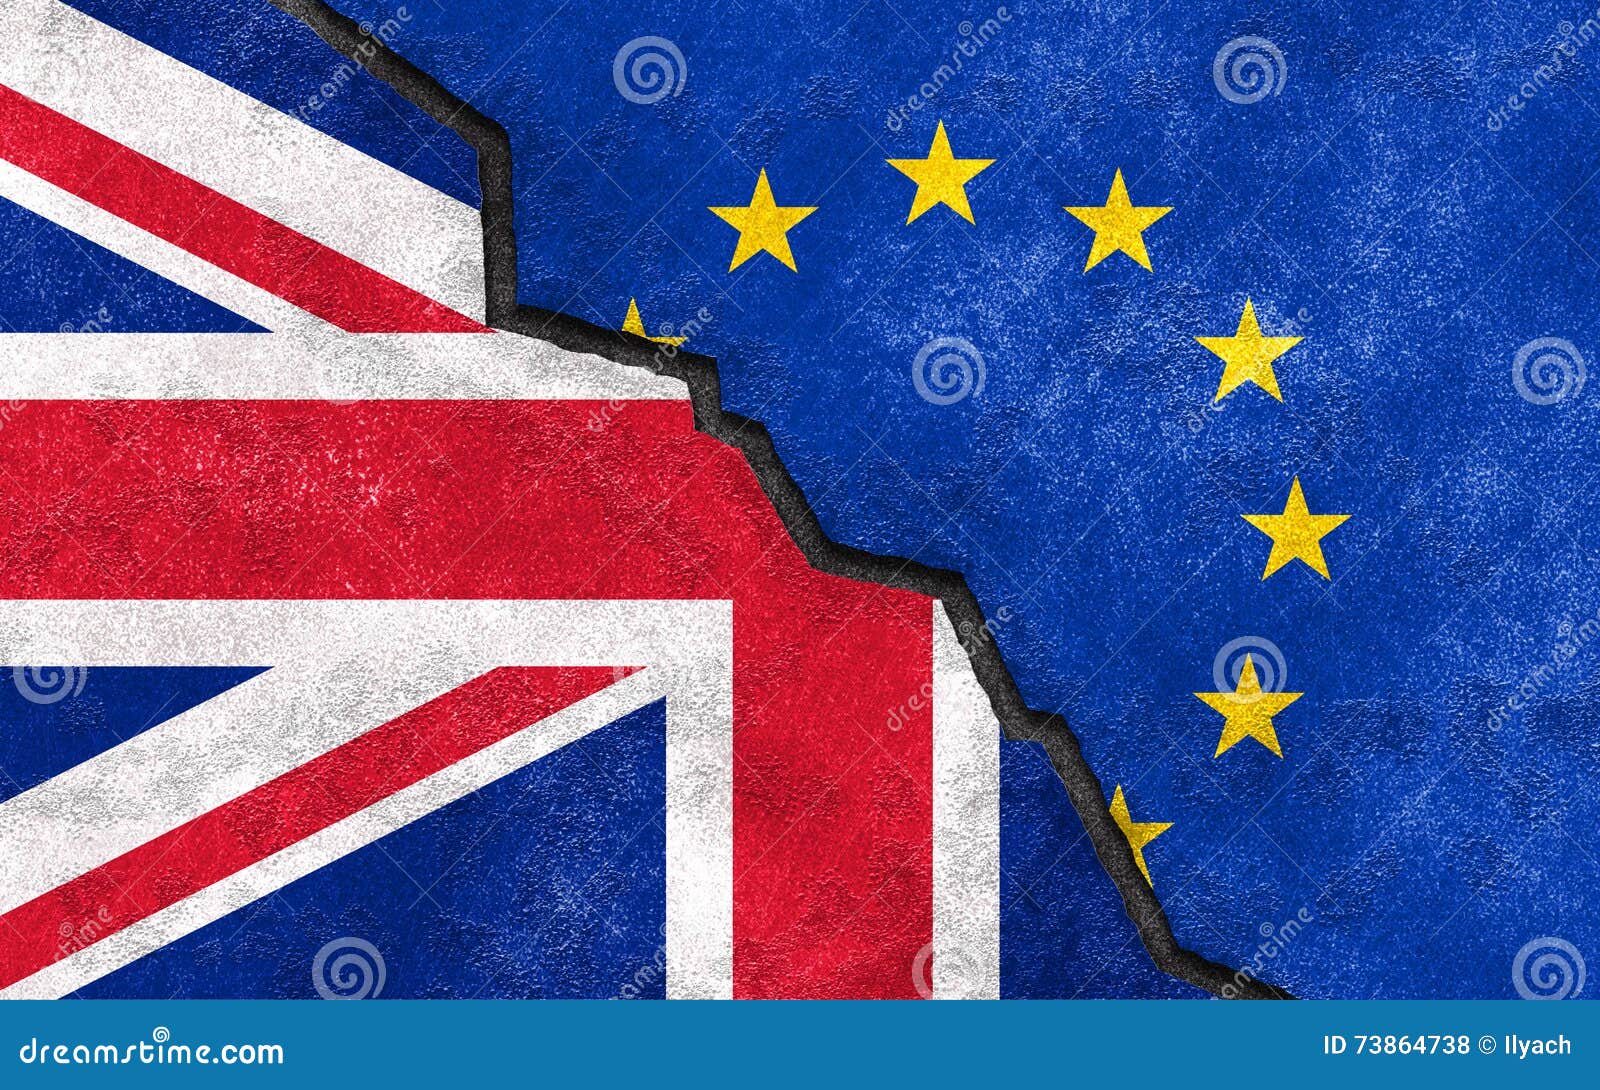 Brexit Great Britain Leaving EU Vector Illustration | CartoonDealer.com #86147458